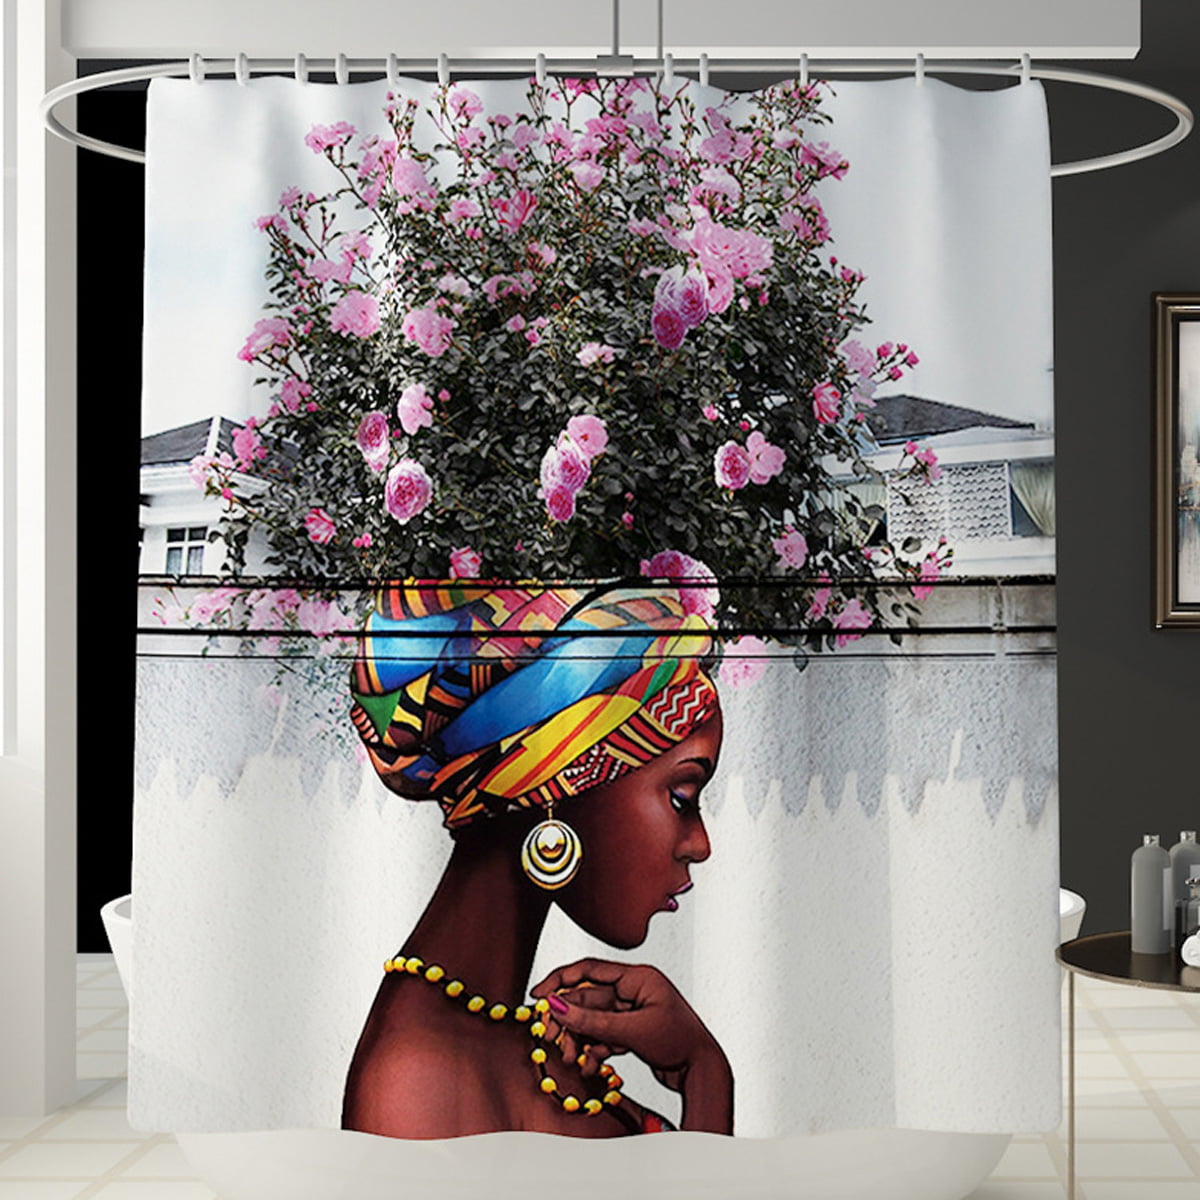 Novashion Black Girl Shower Curtain, African Woman Shower Curtain